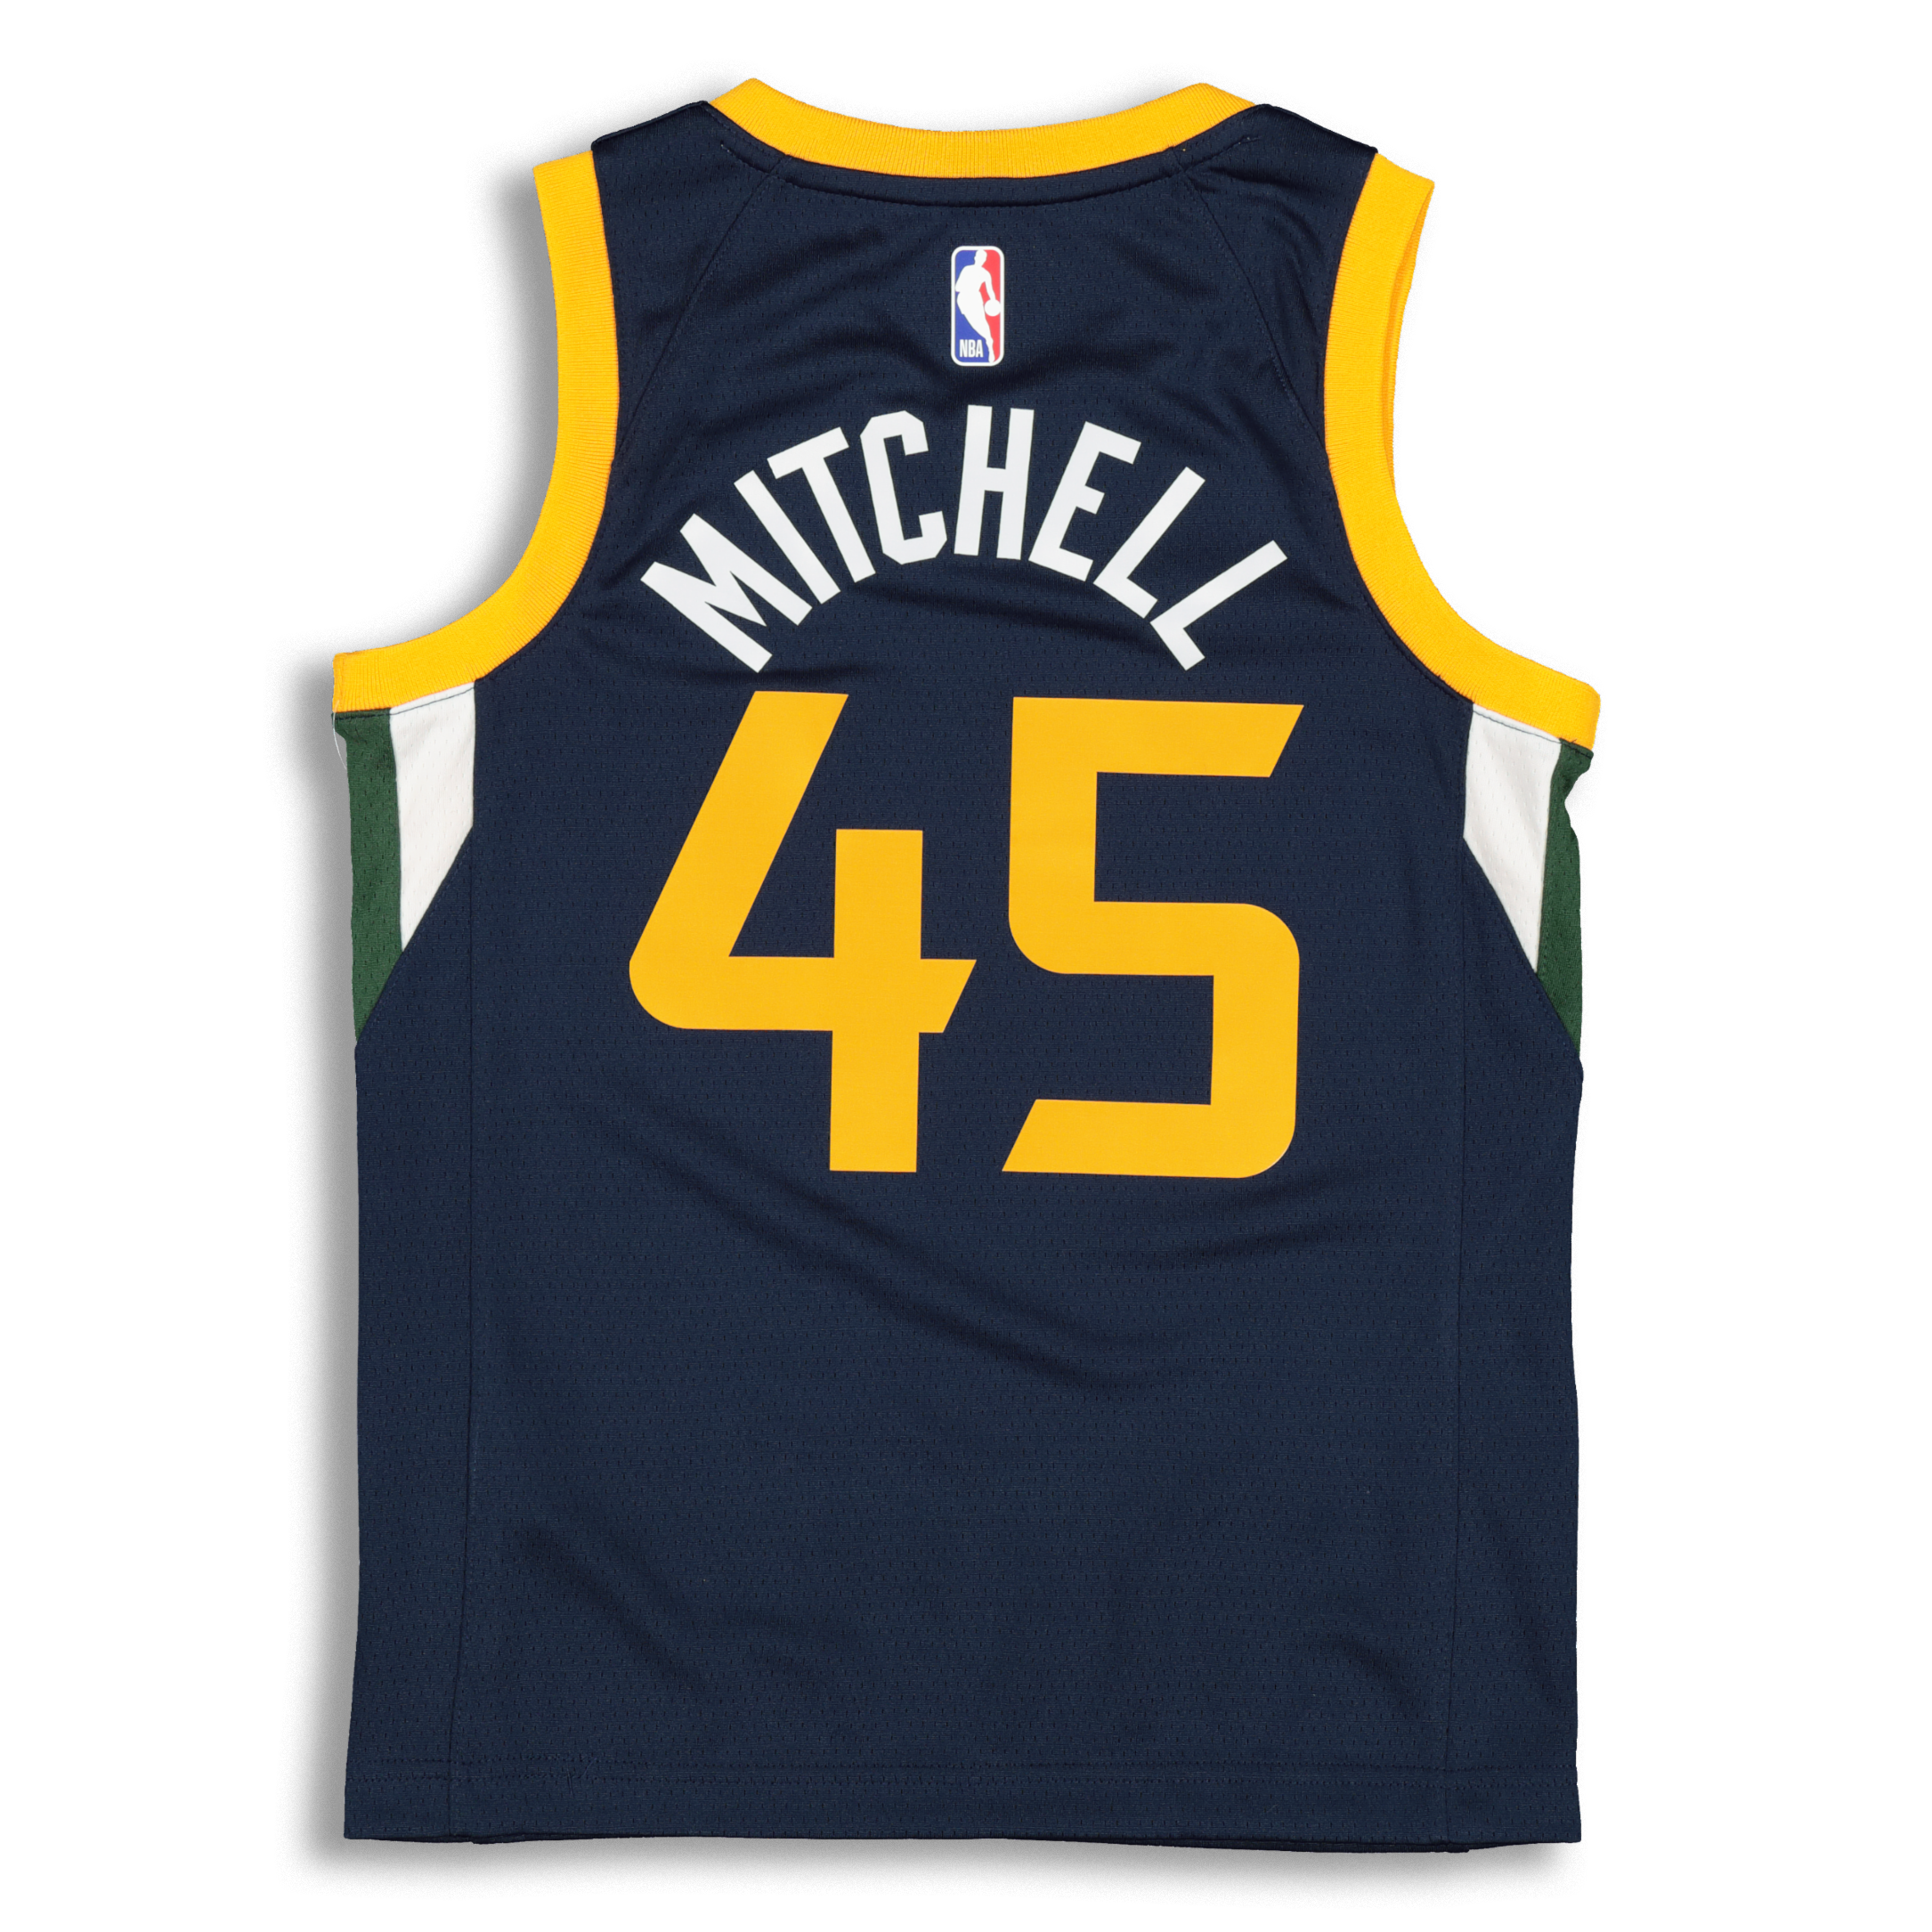 donovan mitchell jersey number